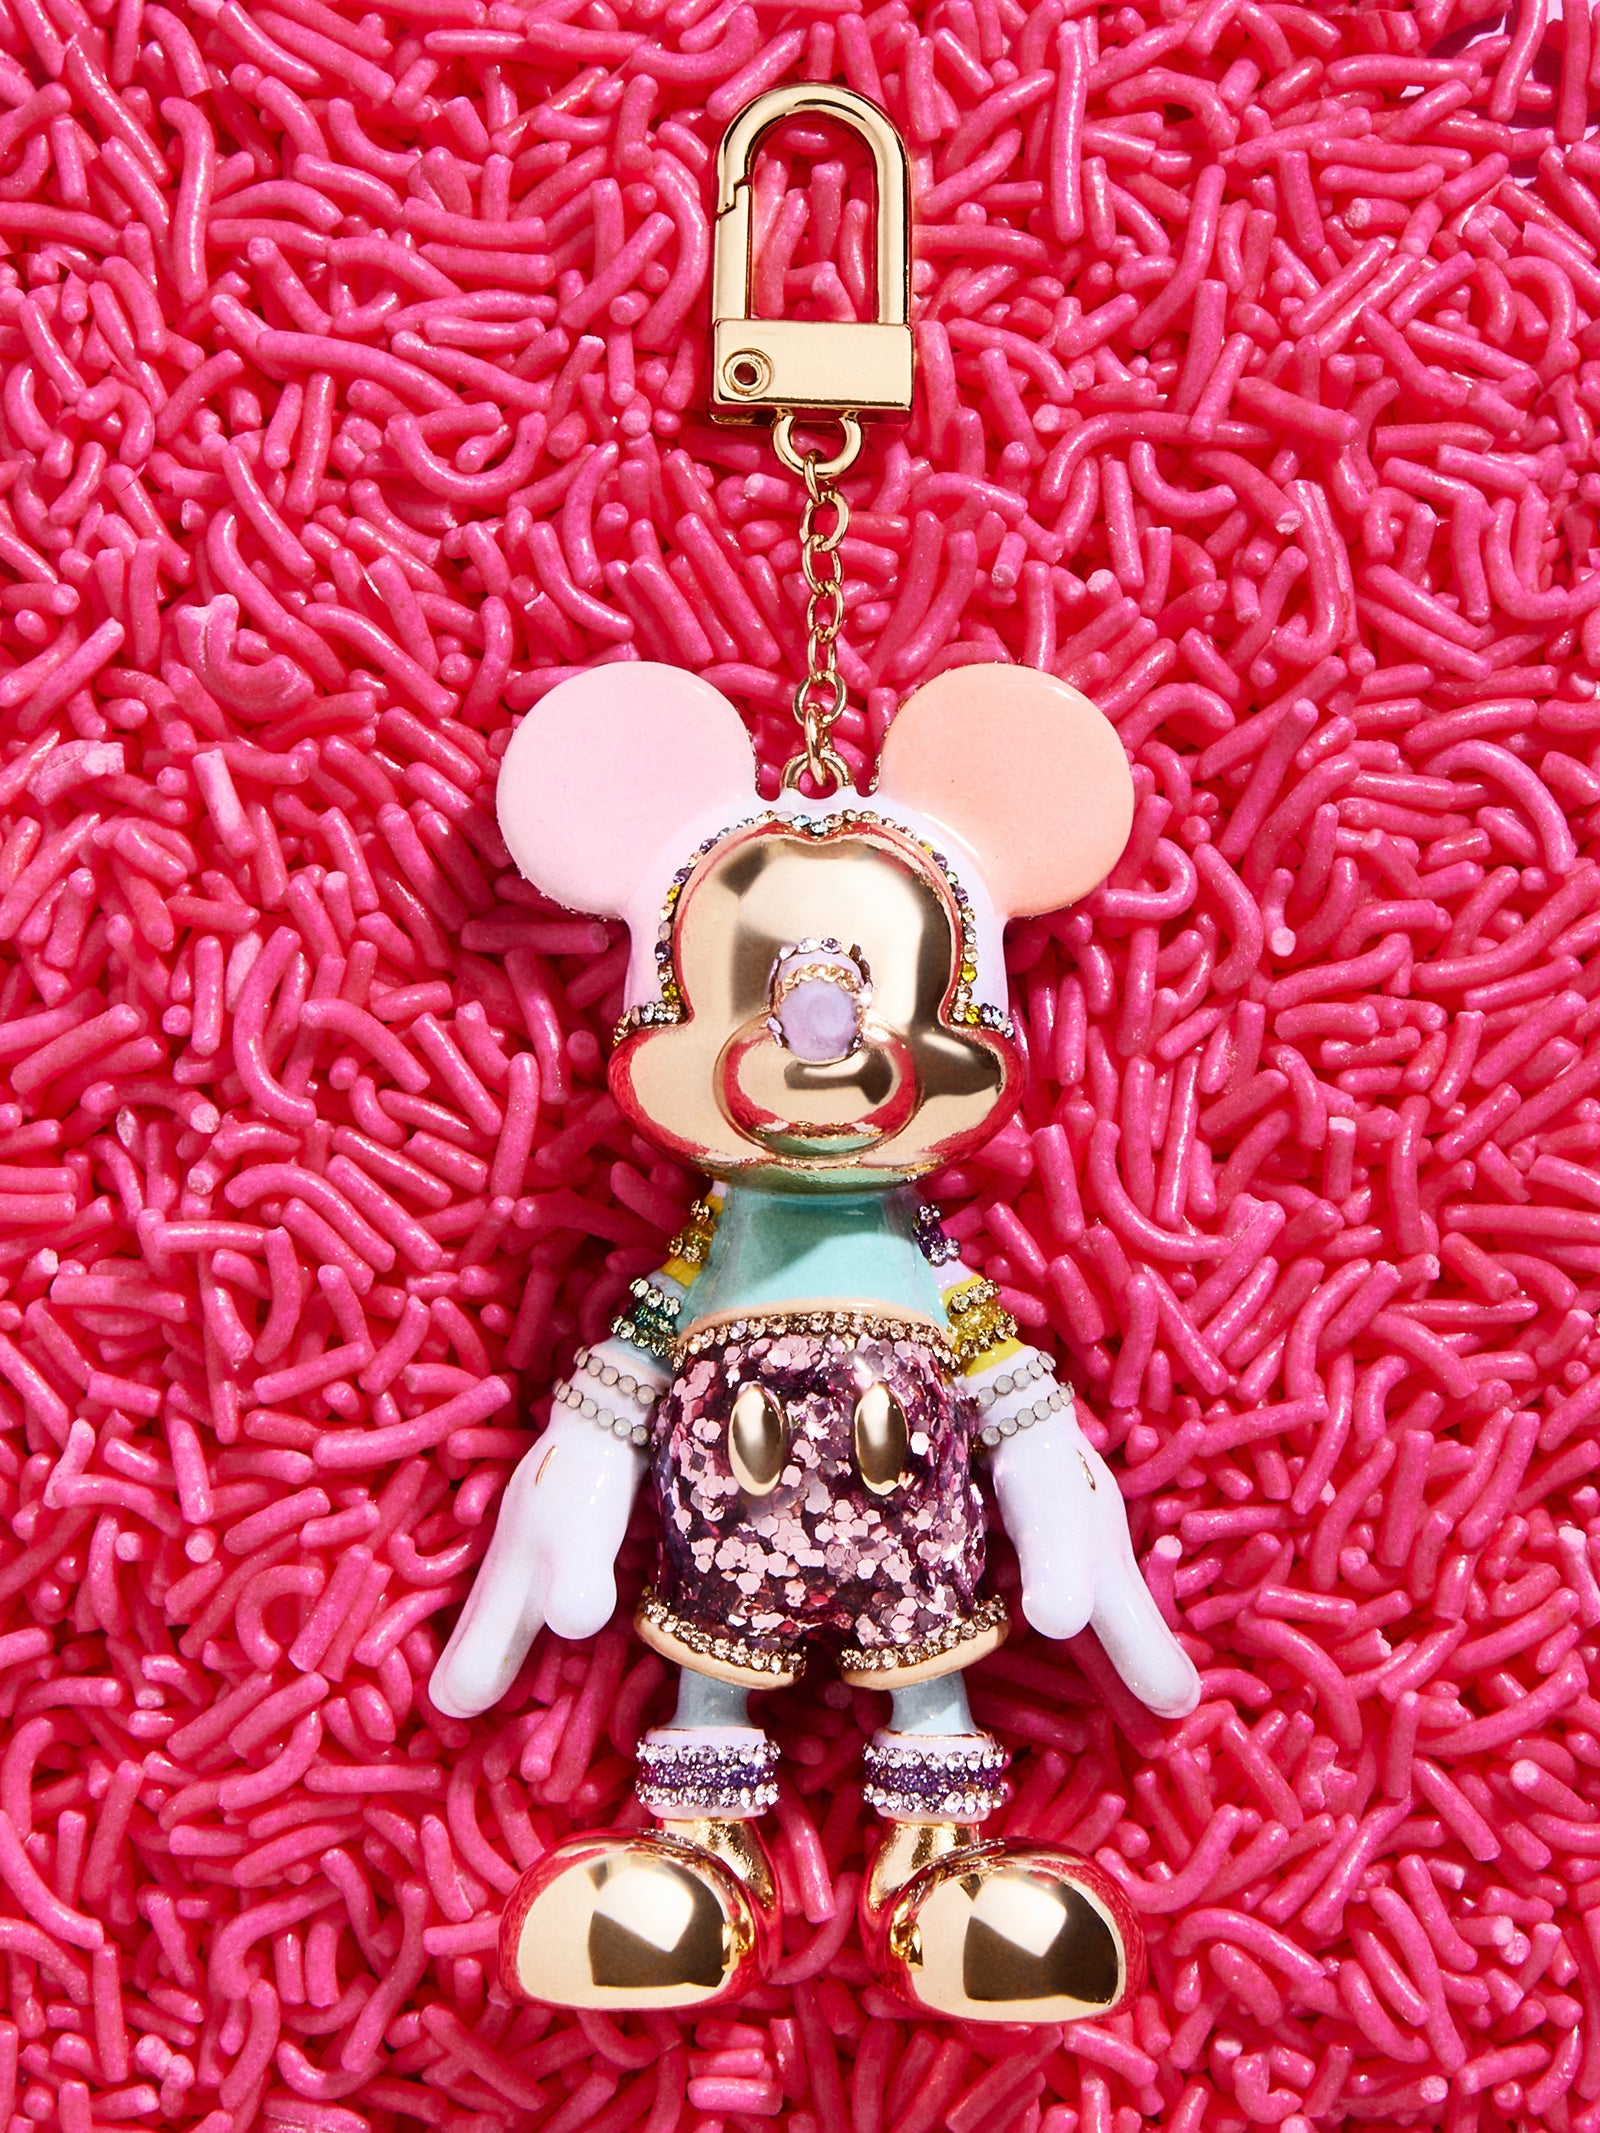 Mickey Mouse Disney Bag Charm - Mickey Mouse Macaron